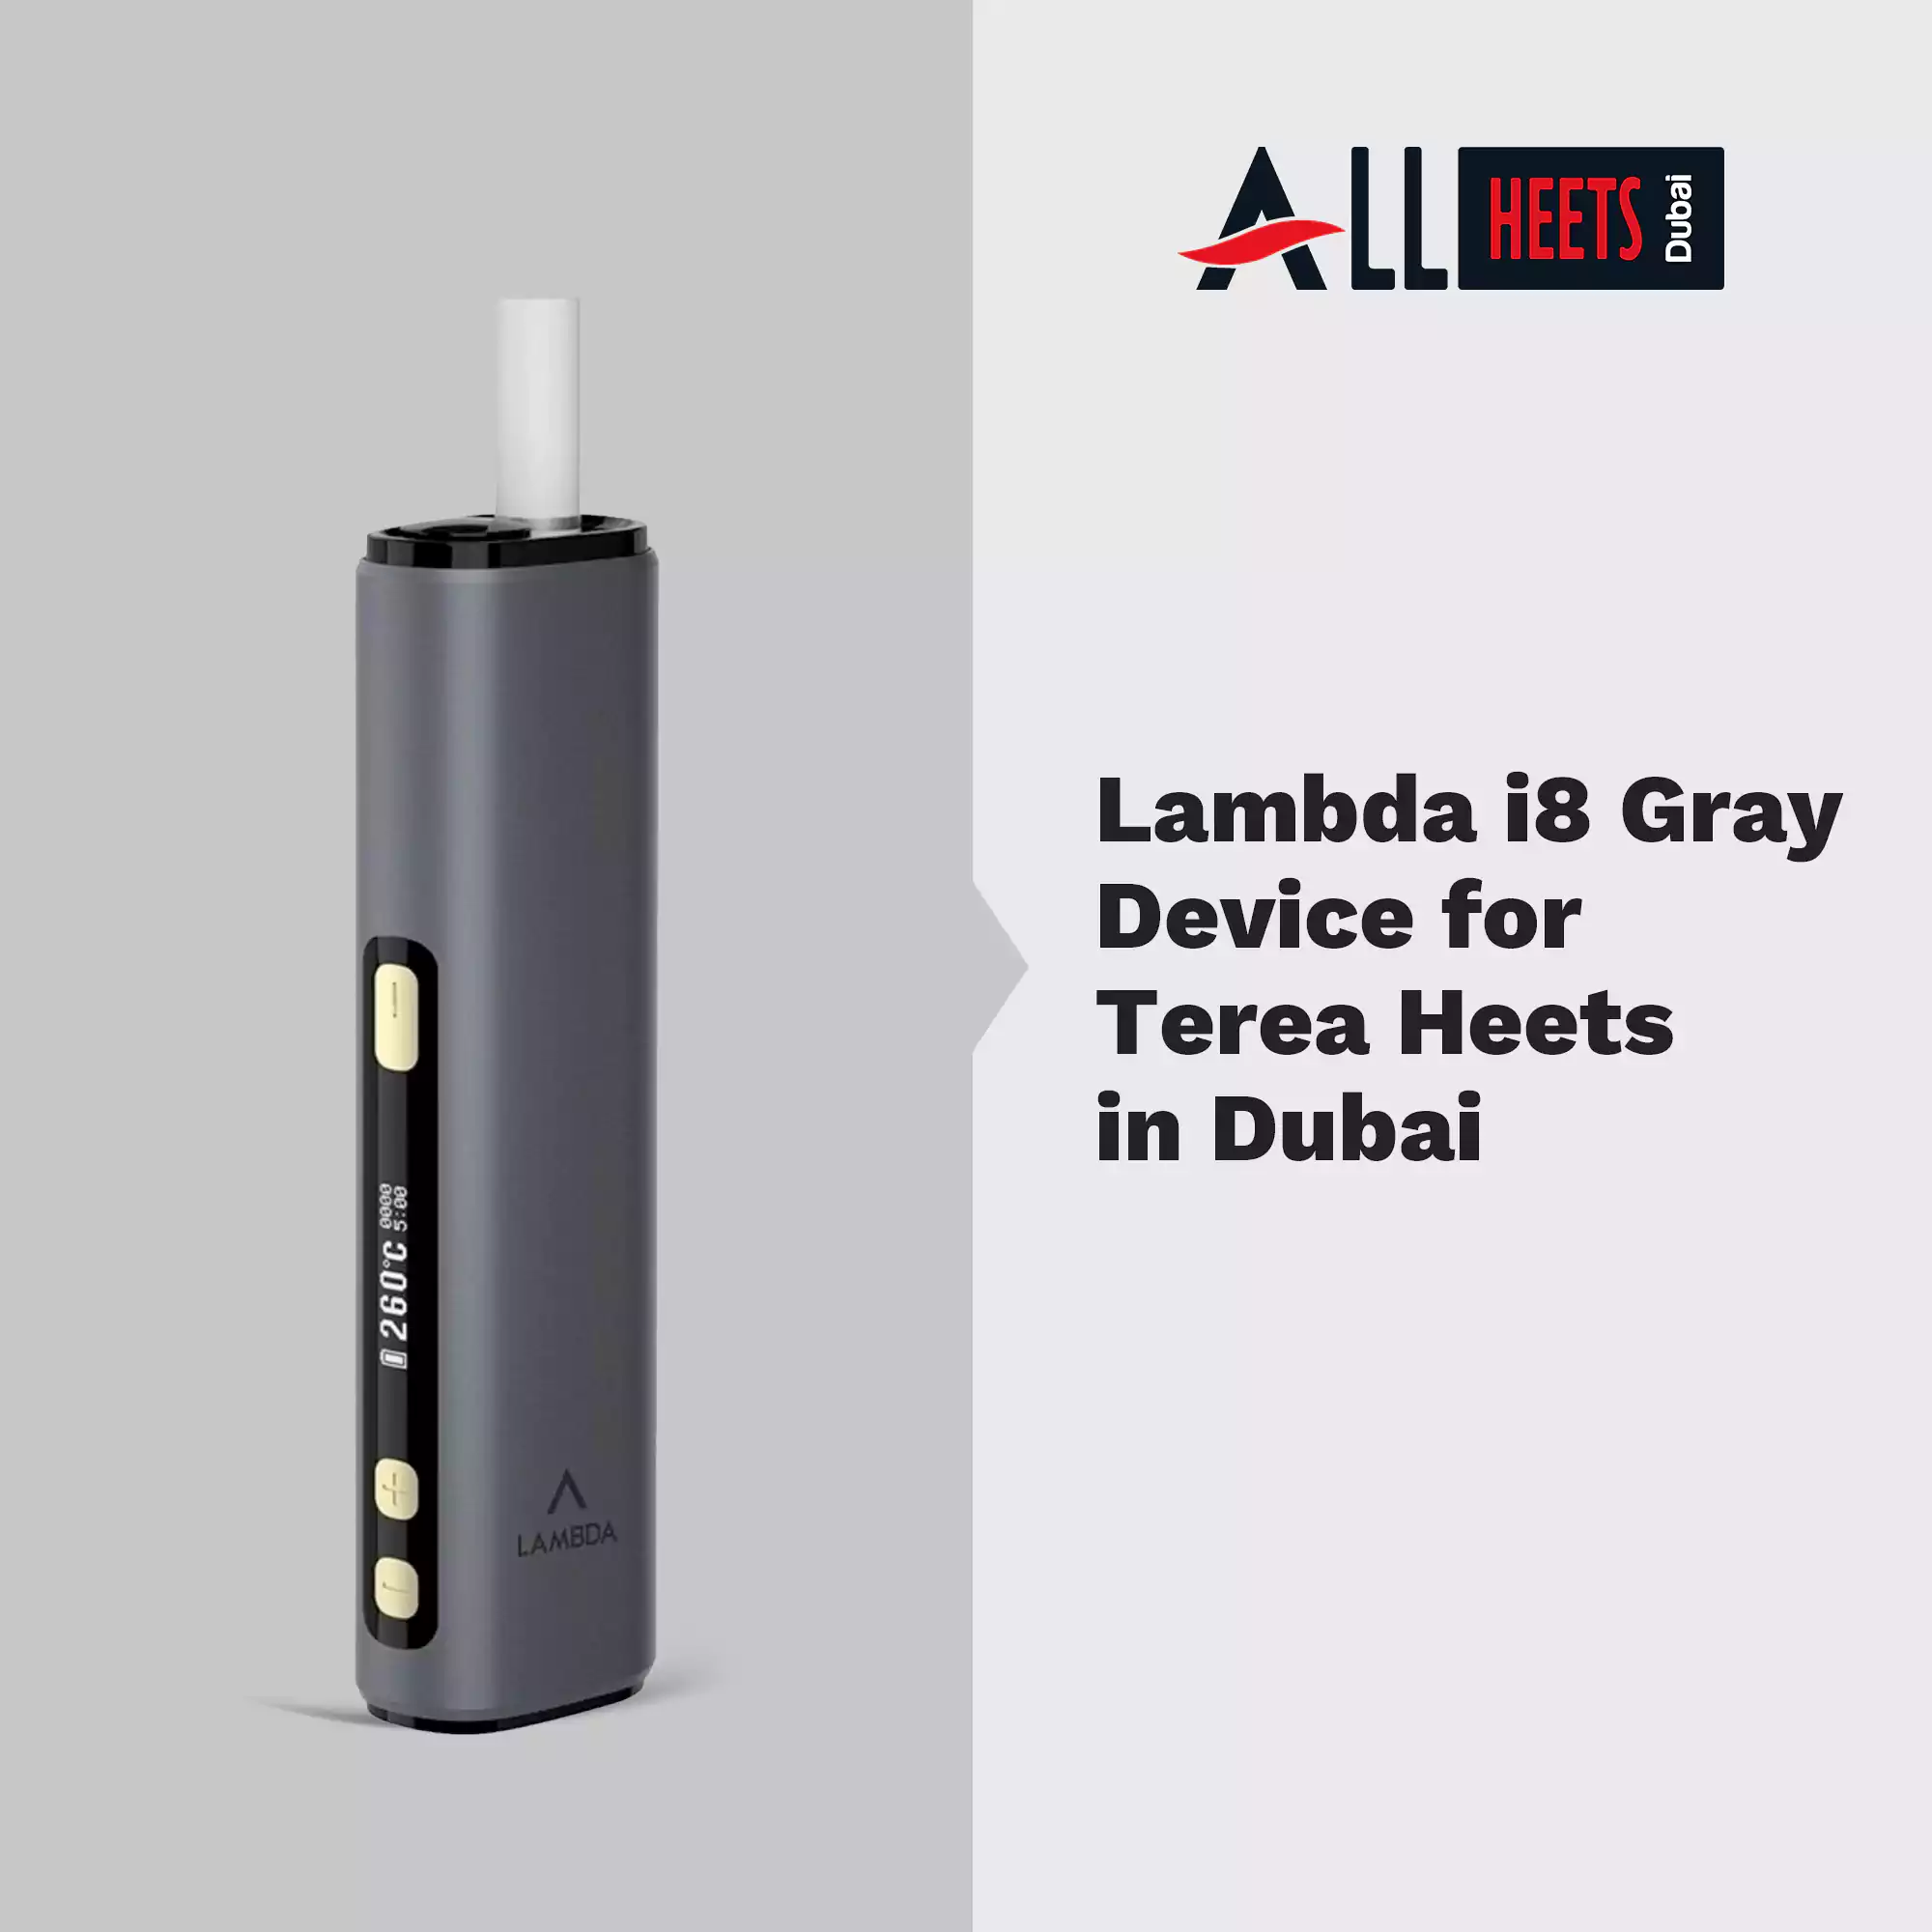 The Ultimate Lambda CC Experience In Dubai